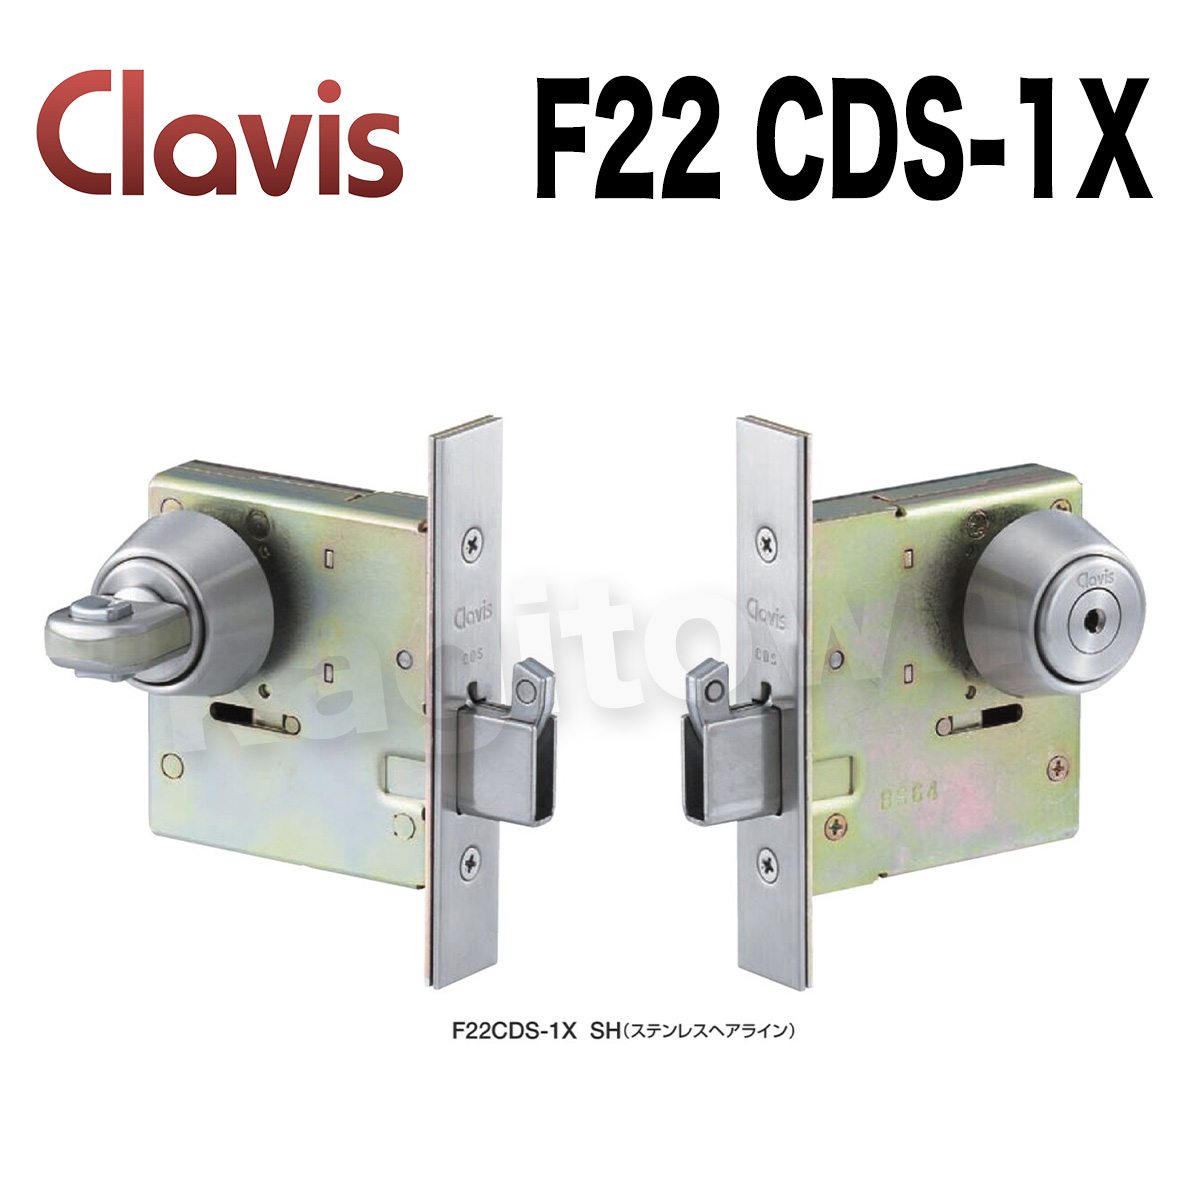 Clavis F22 CDS-1X【クラビス】本締錠/鎌式デッド 納期2~4週間 